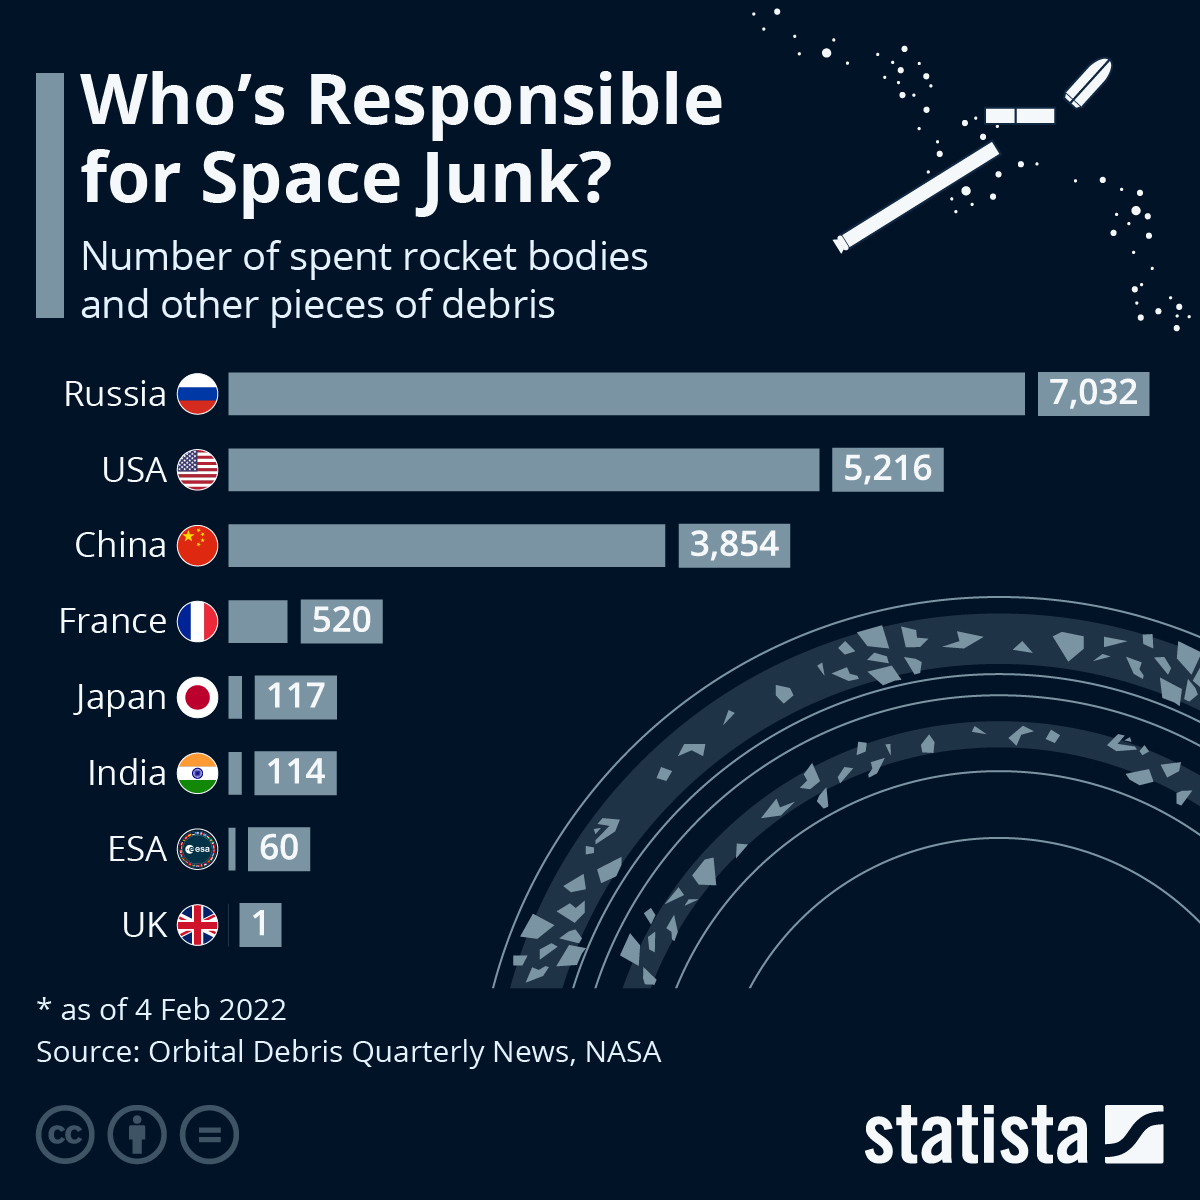 Space-Junk